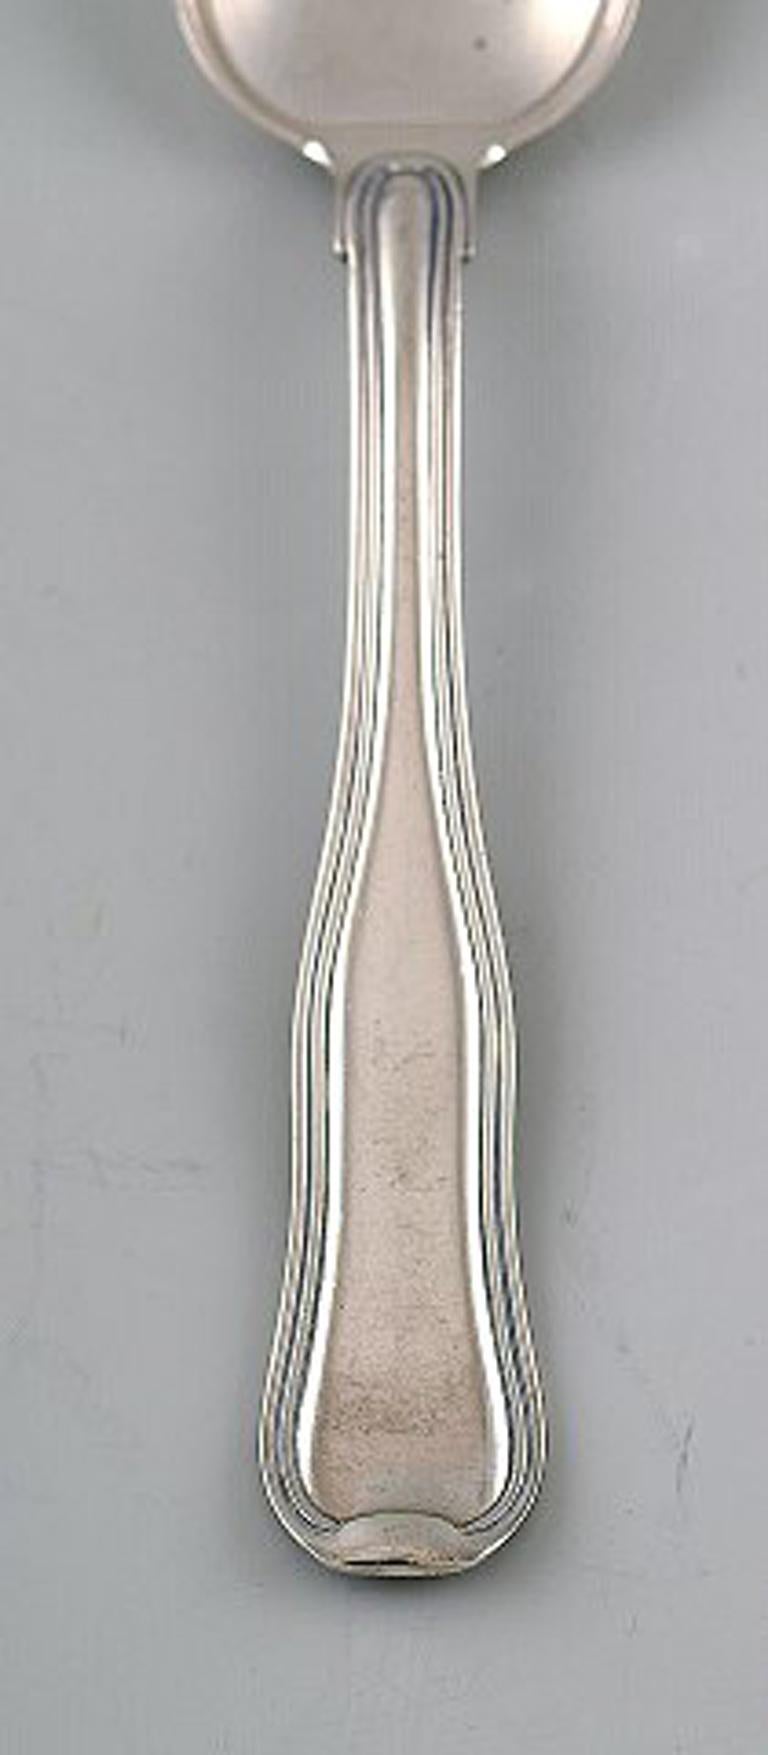 Georg Jensen Old Danish dessert spoon, 5 pcs in stock.
Stamped.
In very good condition.
Measures: 17.5 cm.